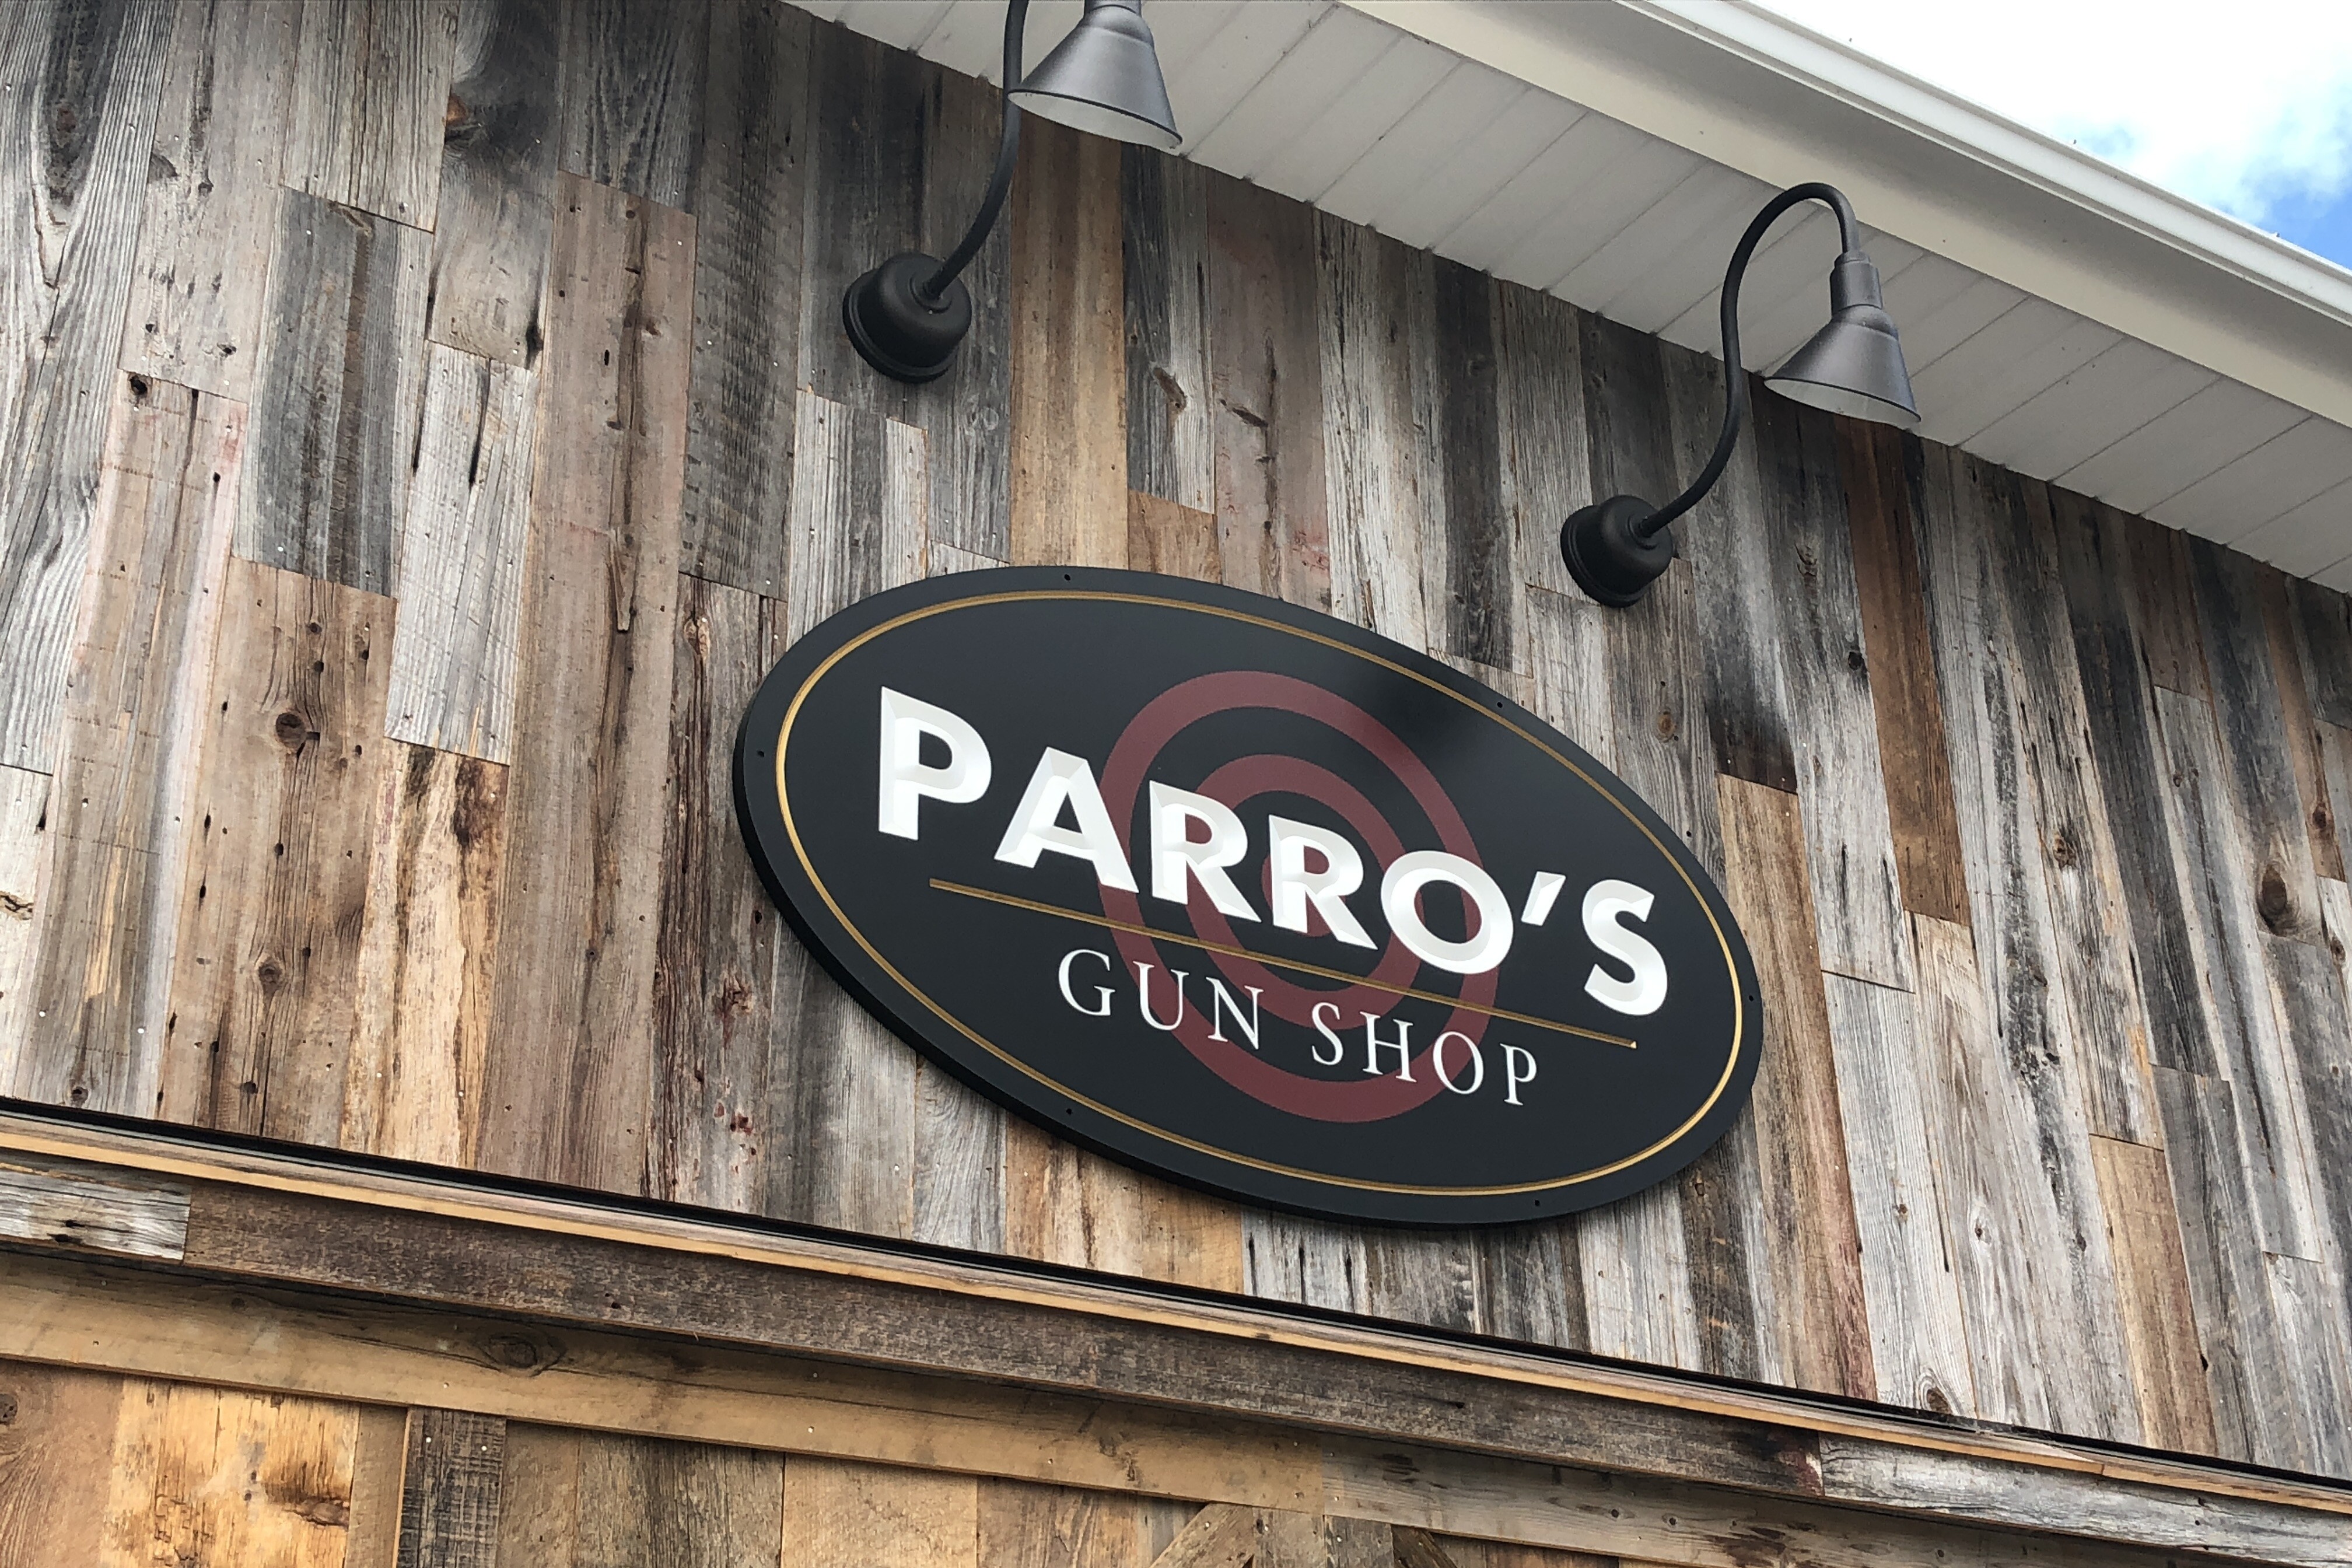 Parro's Gun Shop HDU Sign